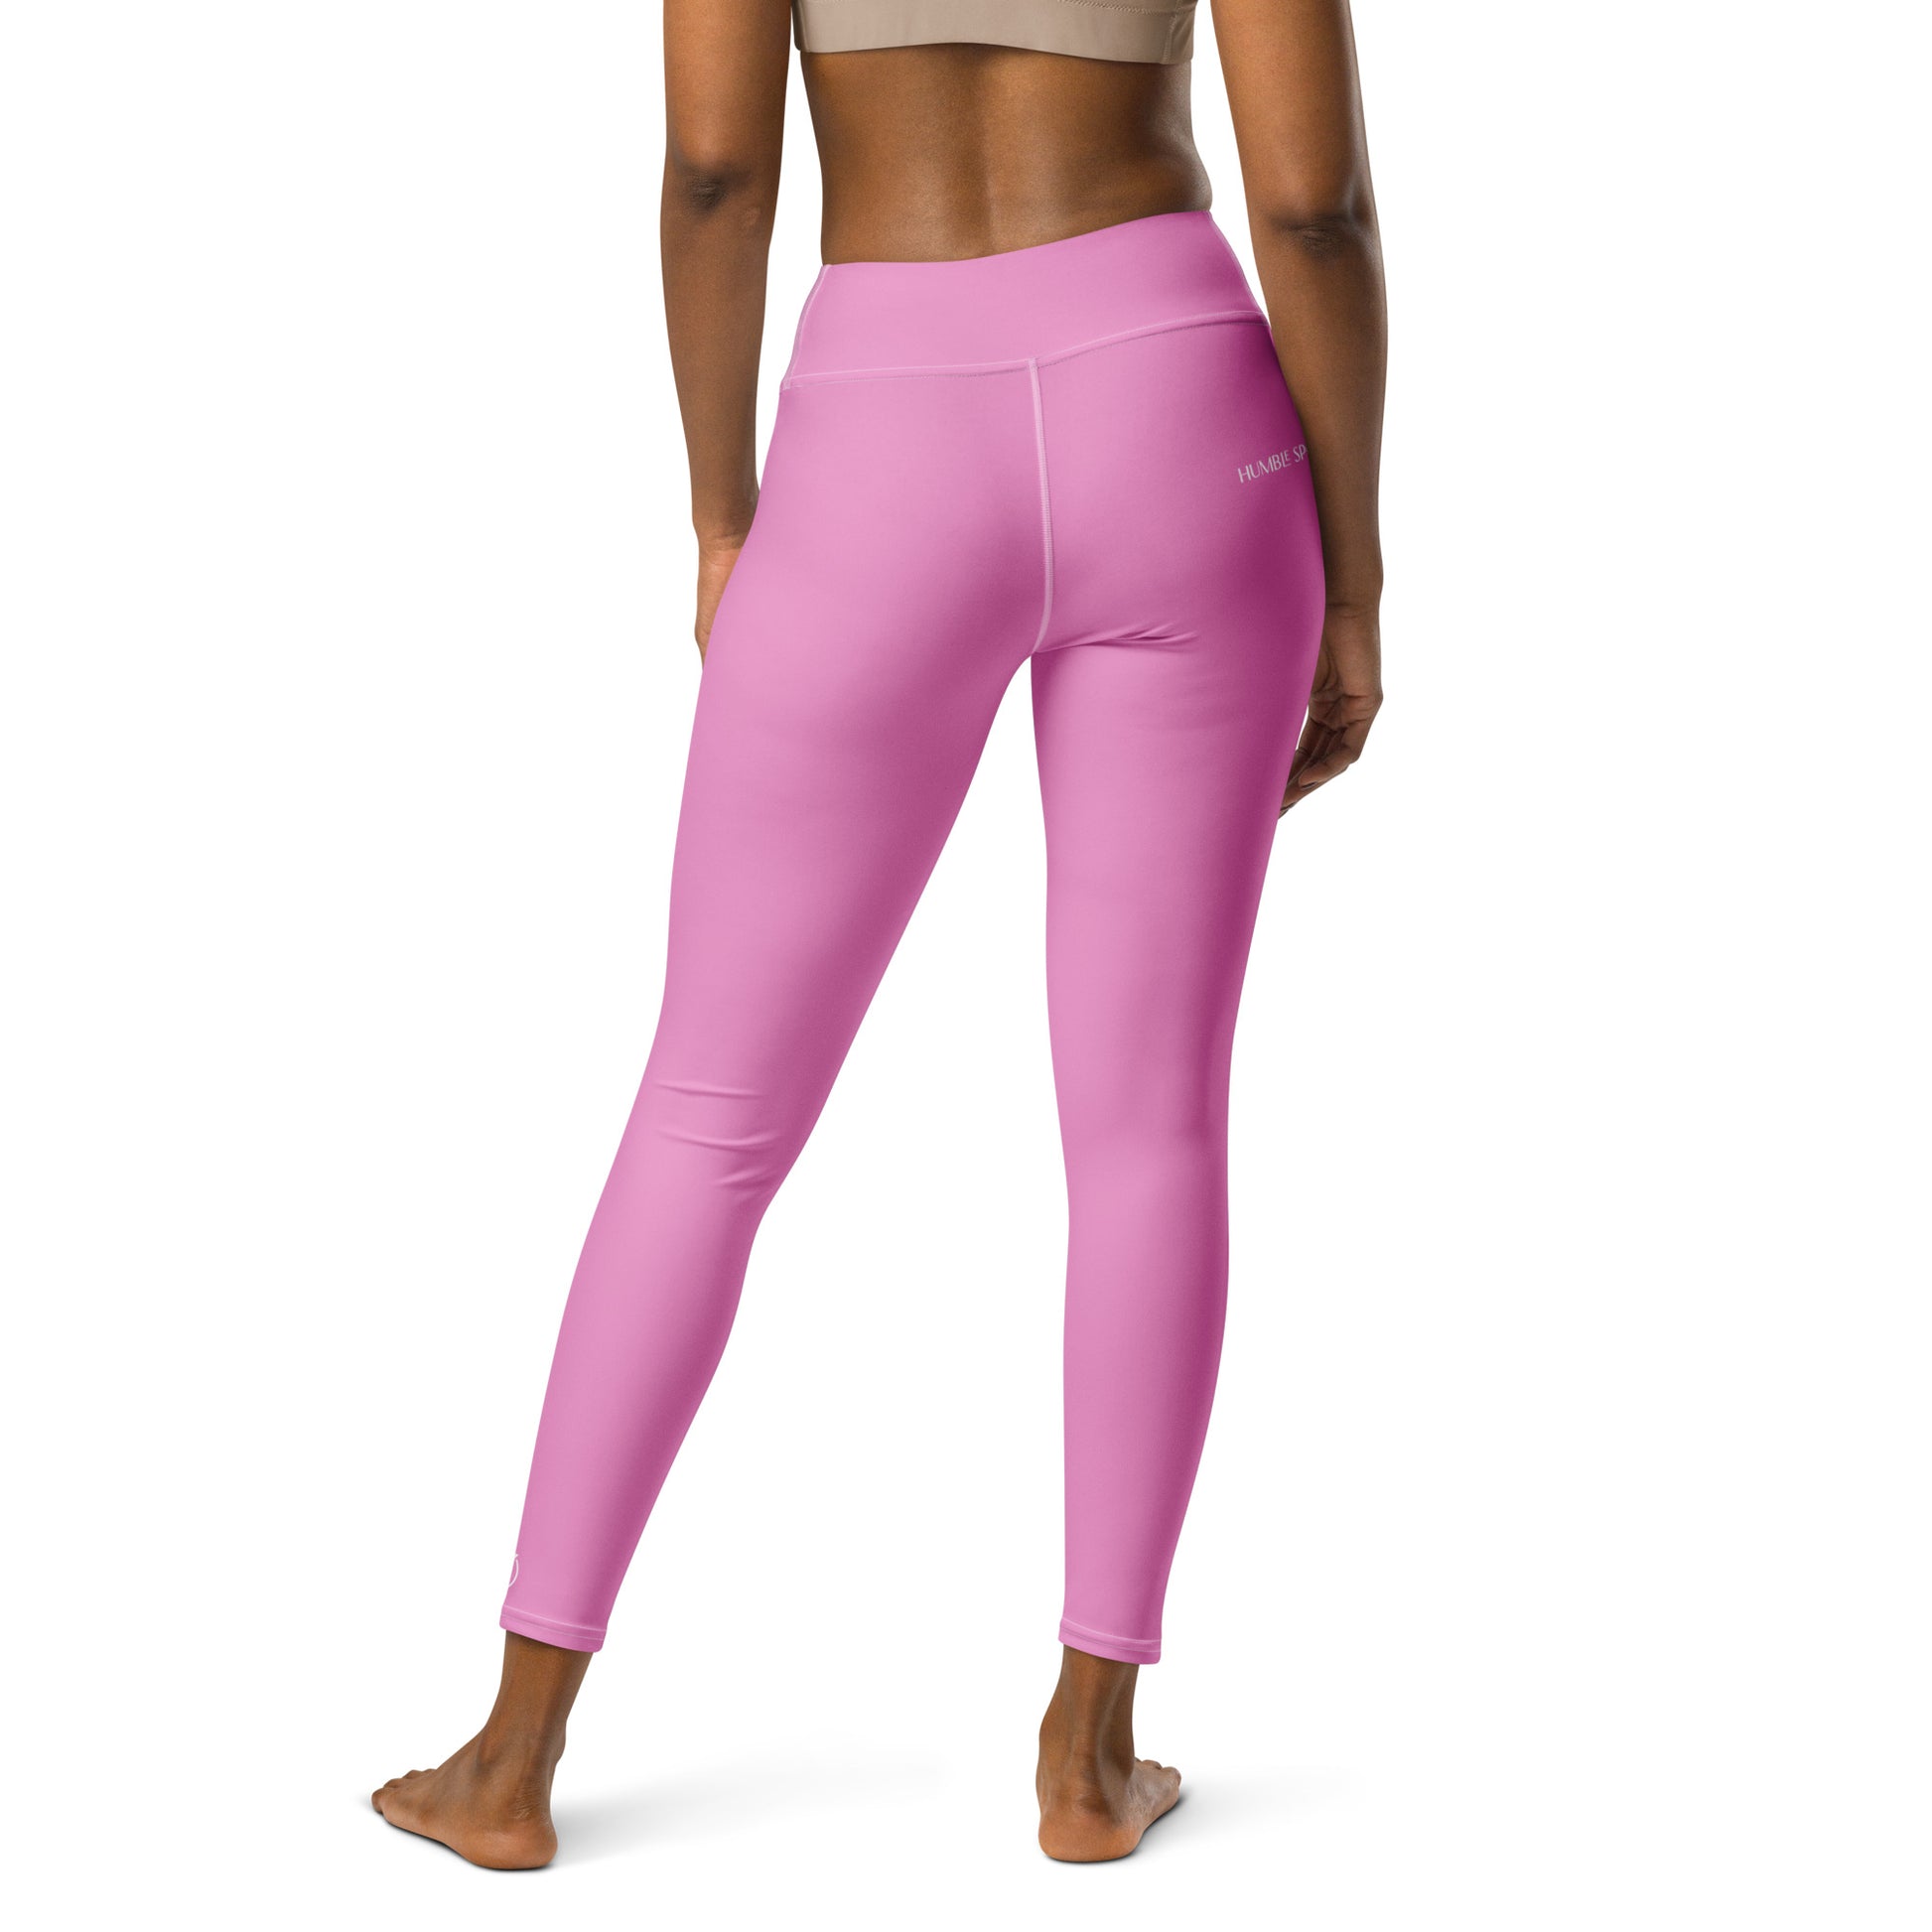 Humble Sportswear, women’s color match leggings, women’s active leggings, women’s pink leggings, high waisted leggings, yoga leggings 